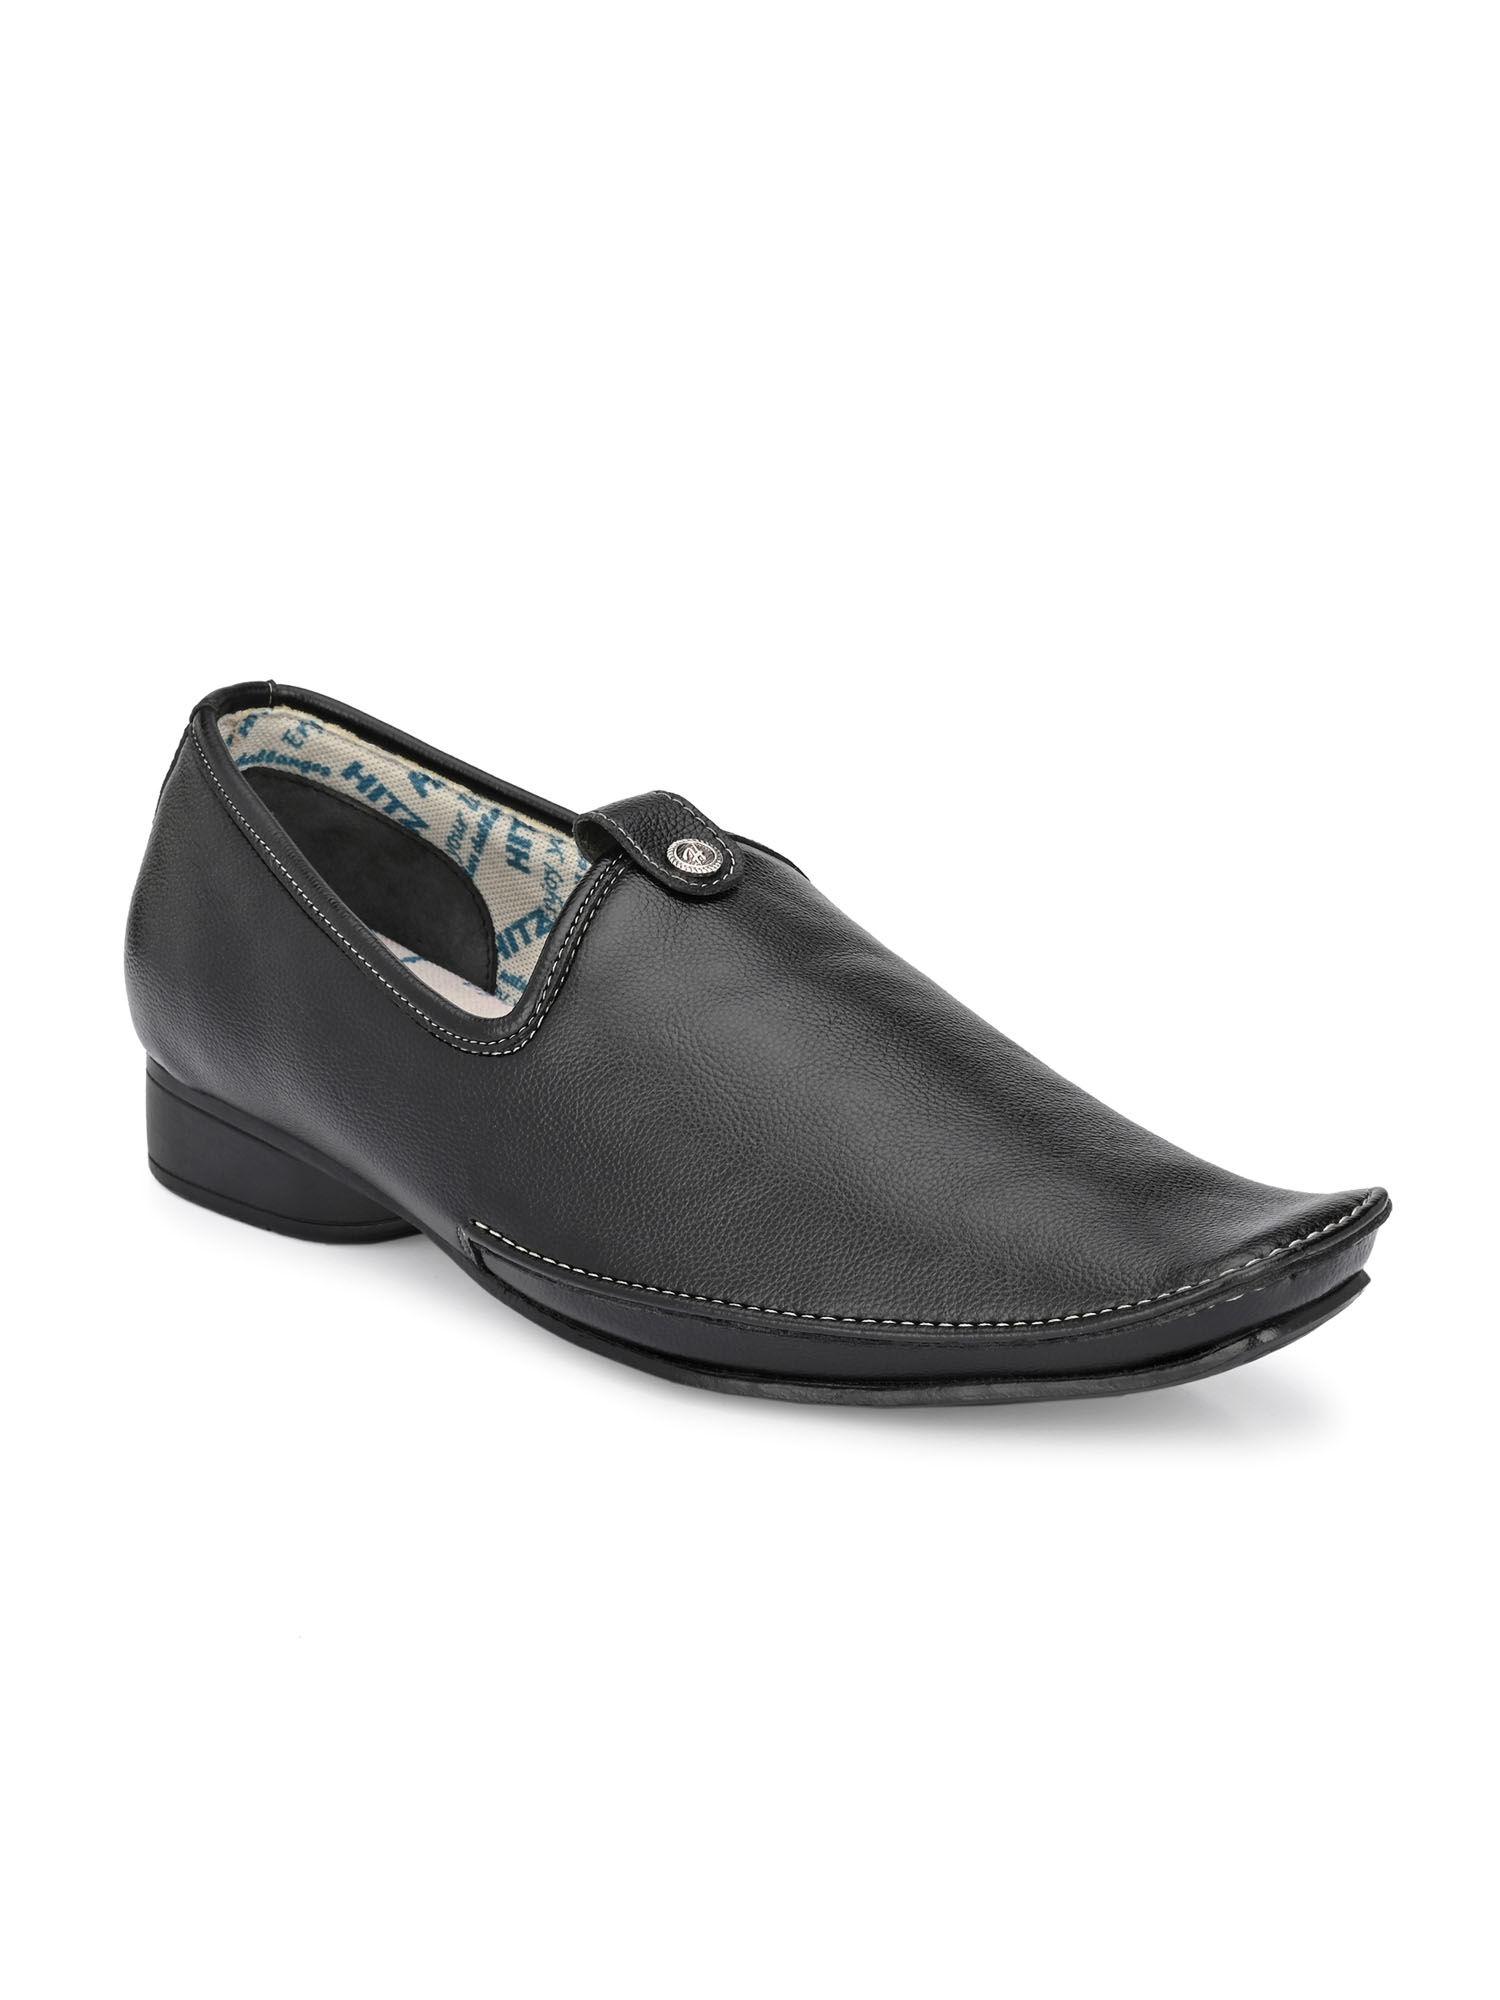 men's black synthetic slip-on ethnic shoes